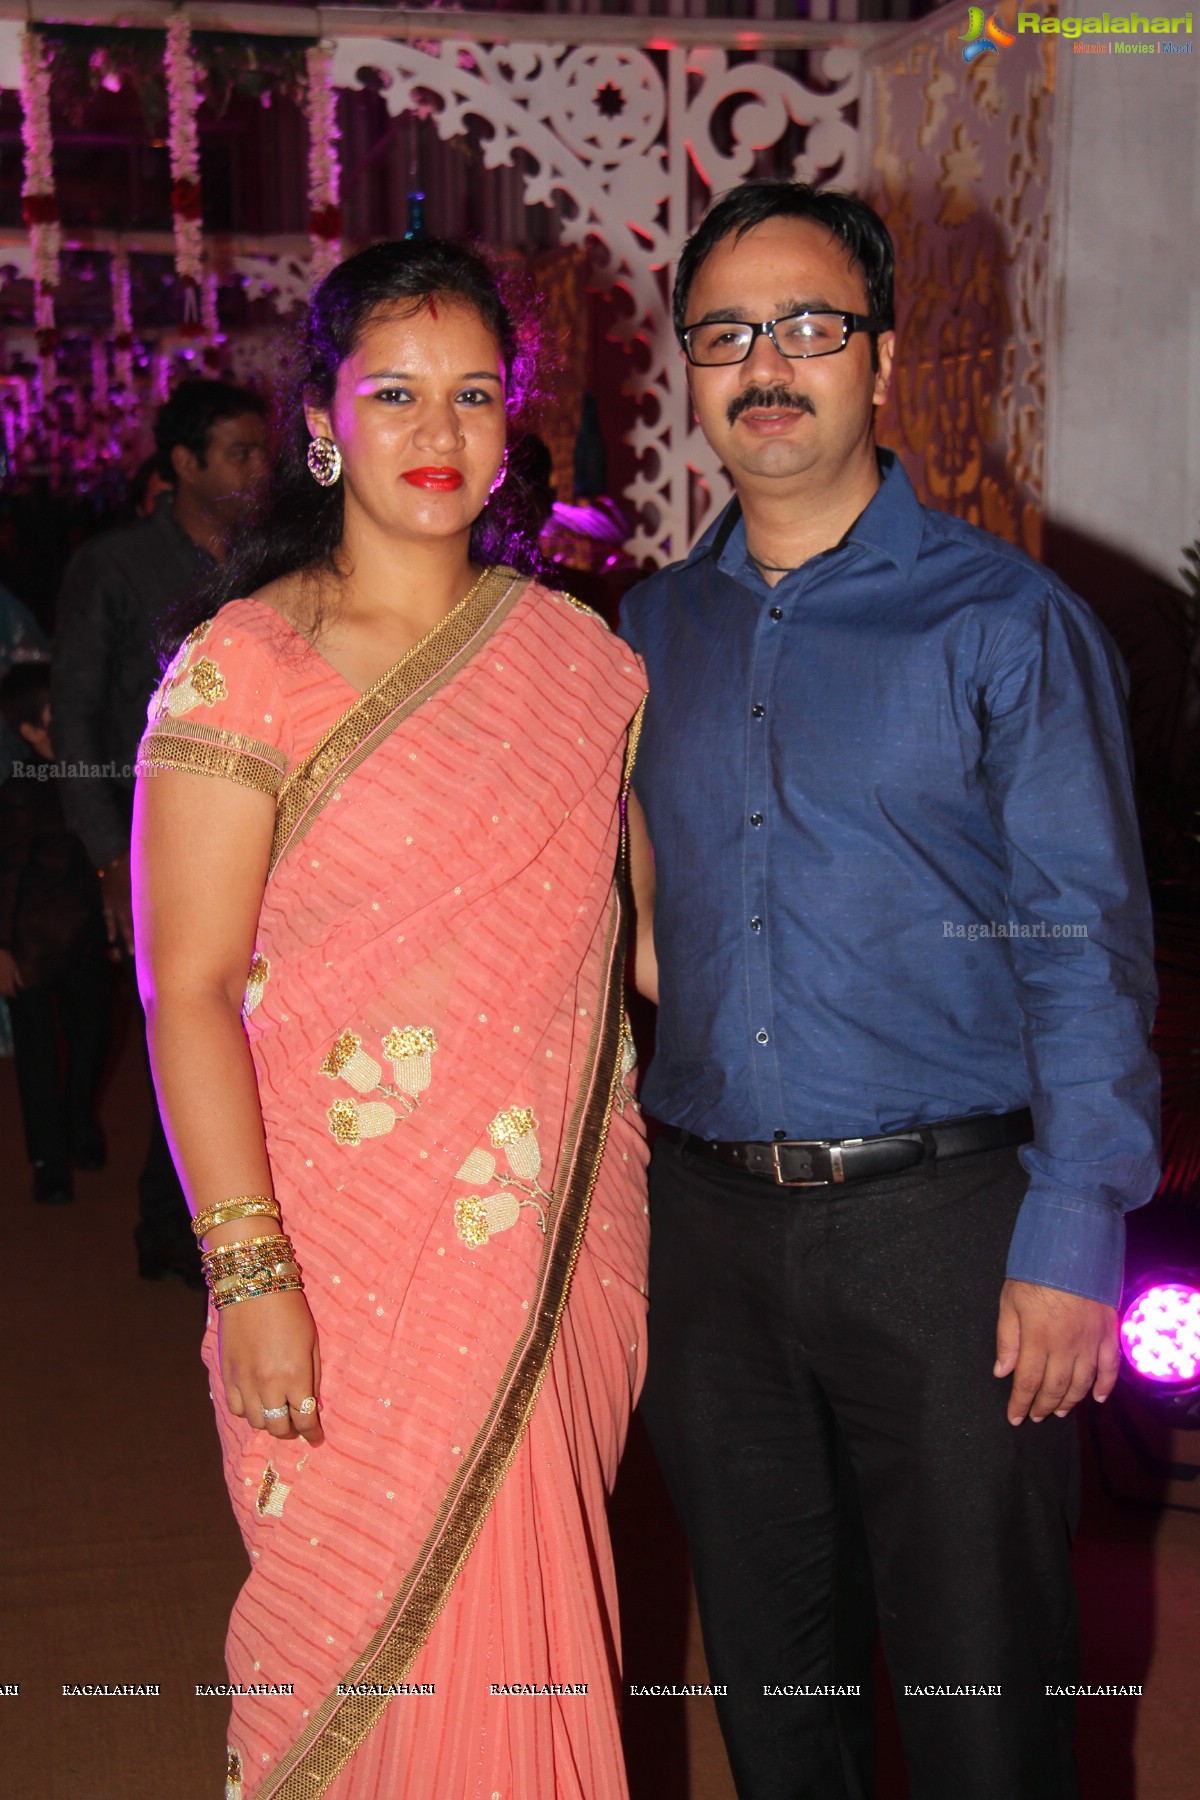 Wedding Ceremony of Sahil Gulati and Priyanka